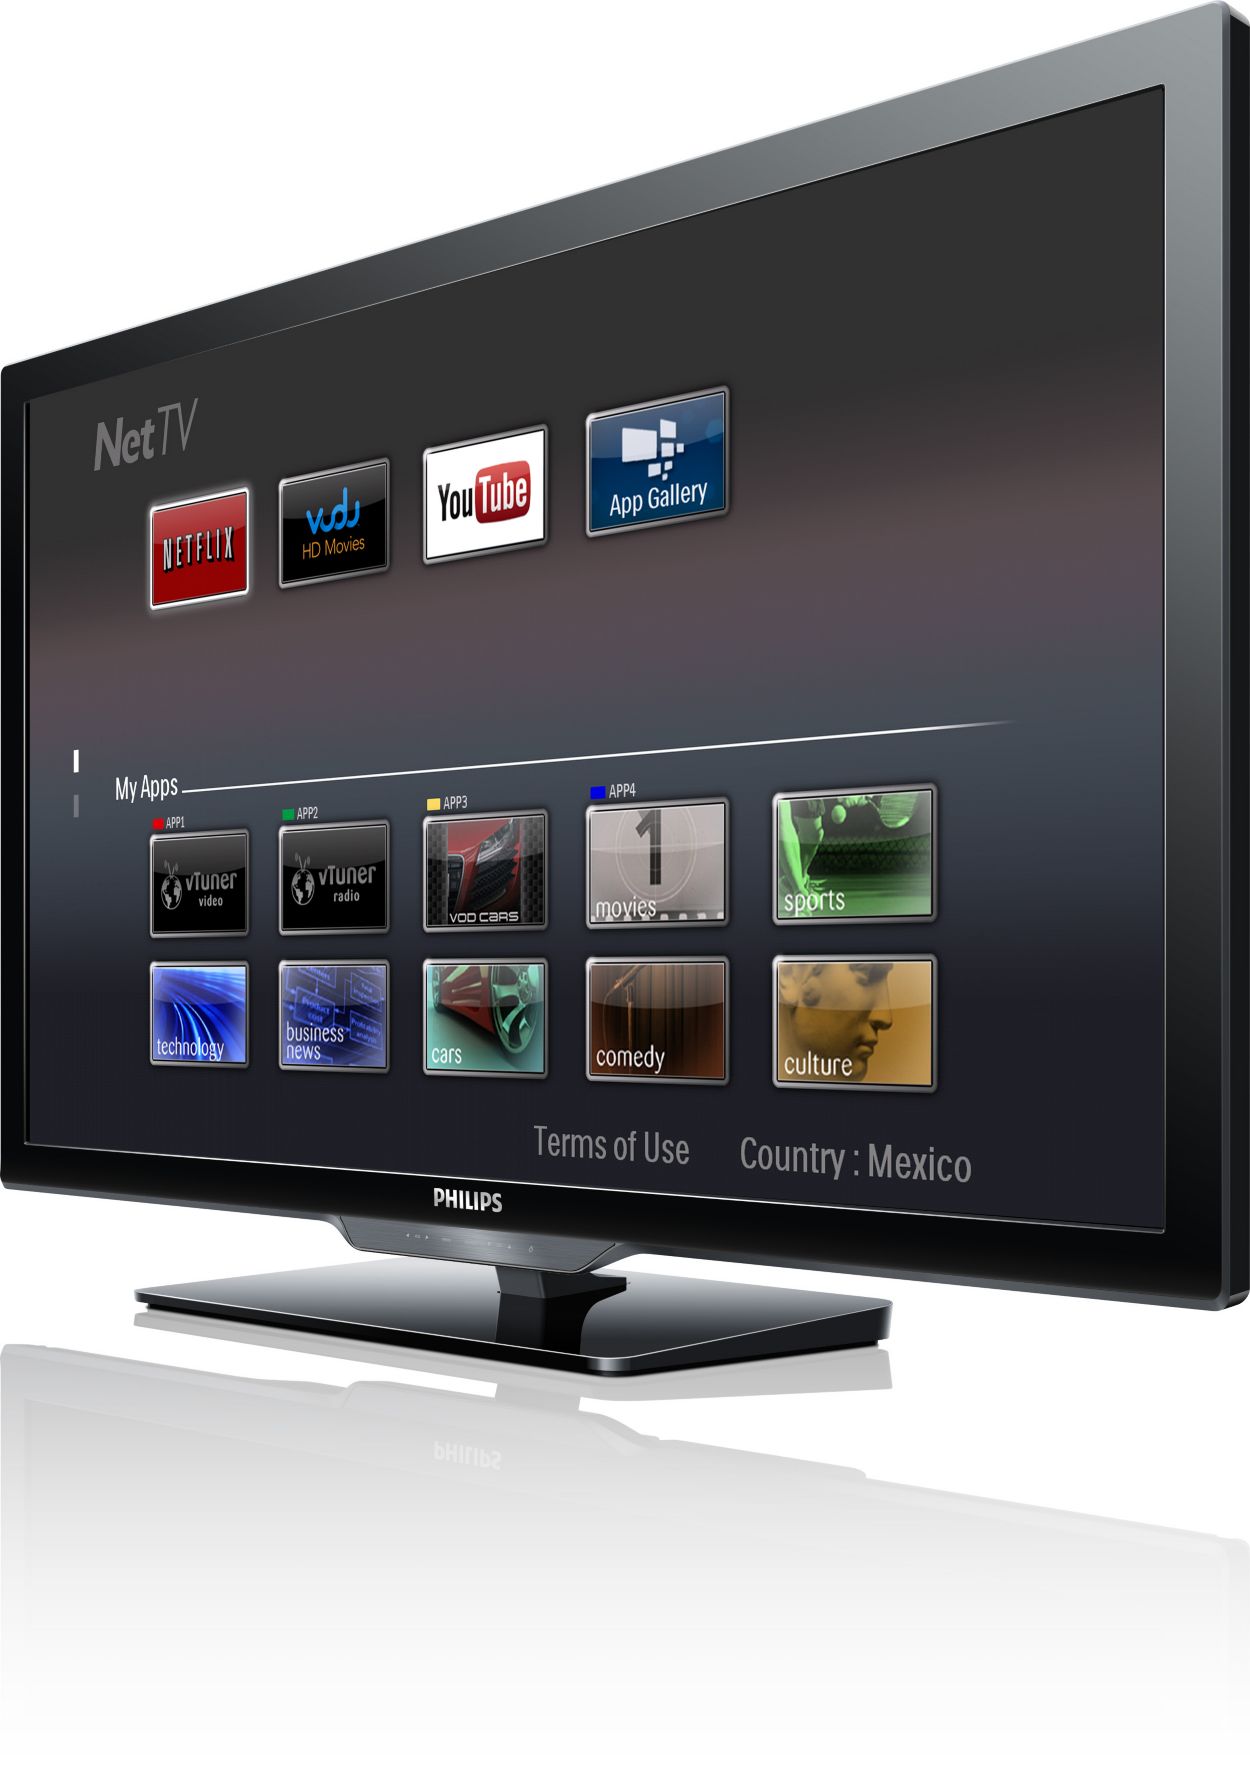 Pantalla Philips 40 Pulgadas LED Full HD Smart TV a precio de socio